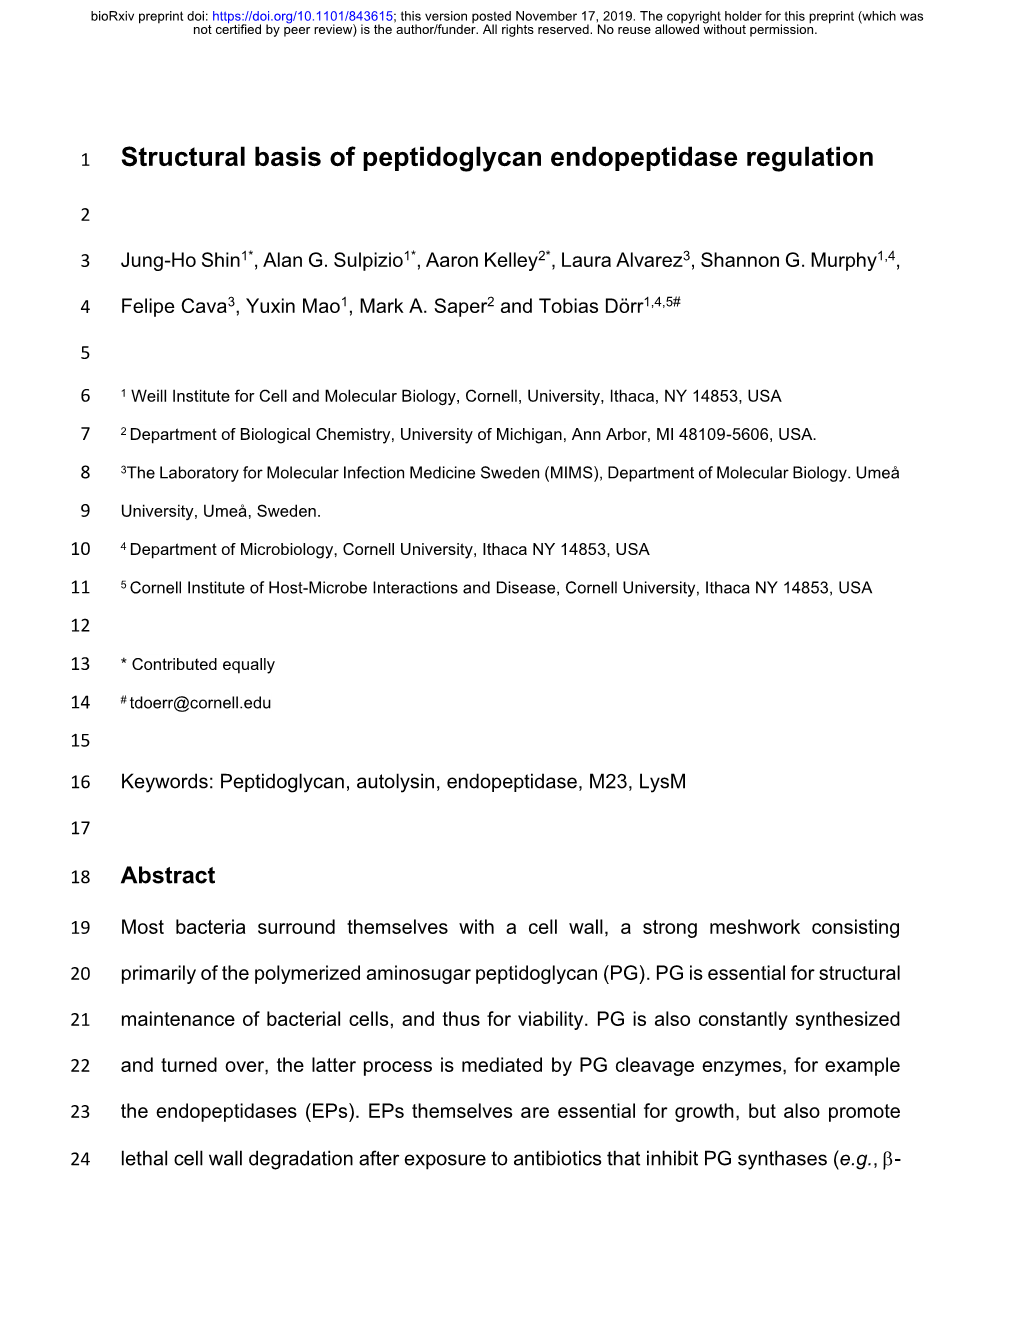 Structural Basis of Peptidoglycan Endopeptidase Regulation